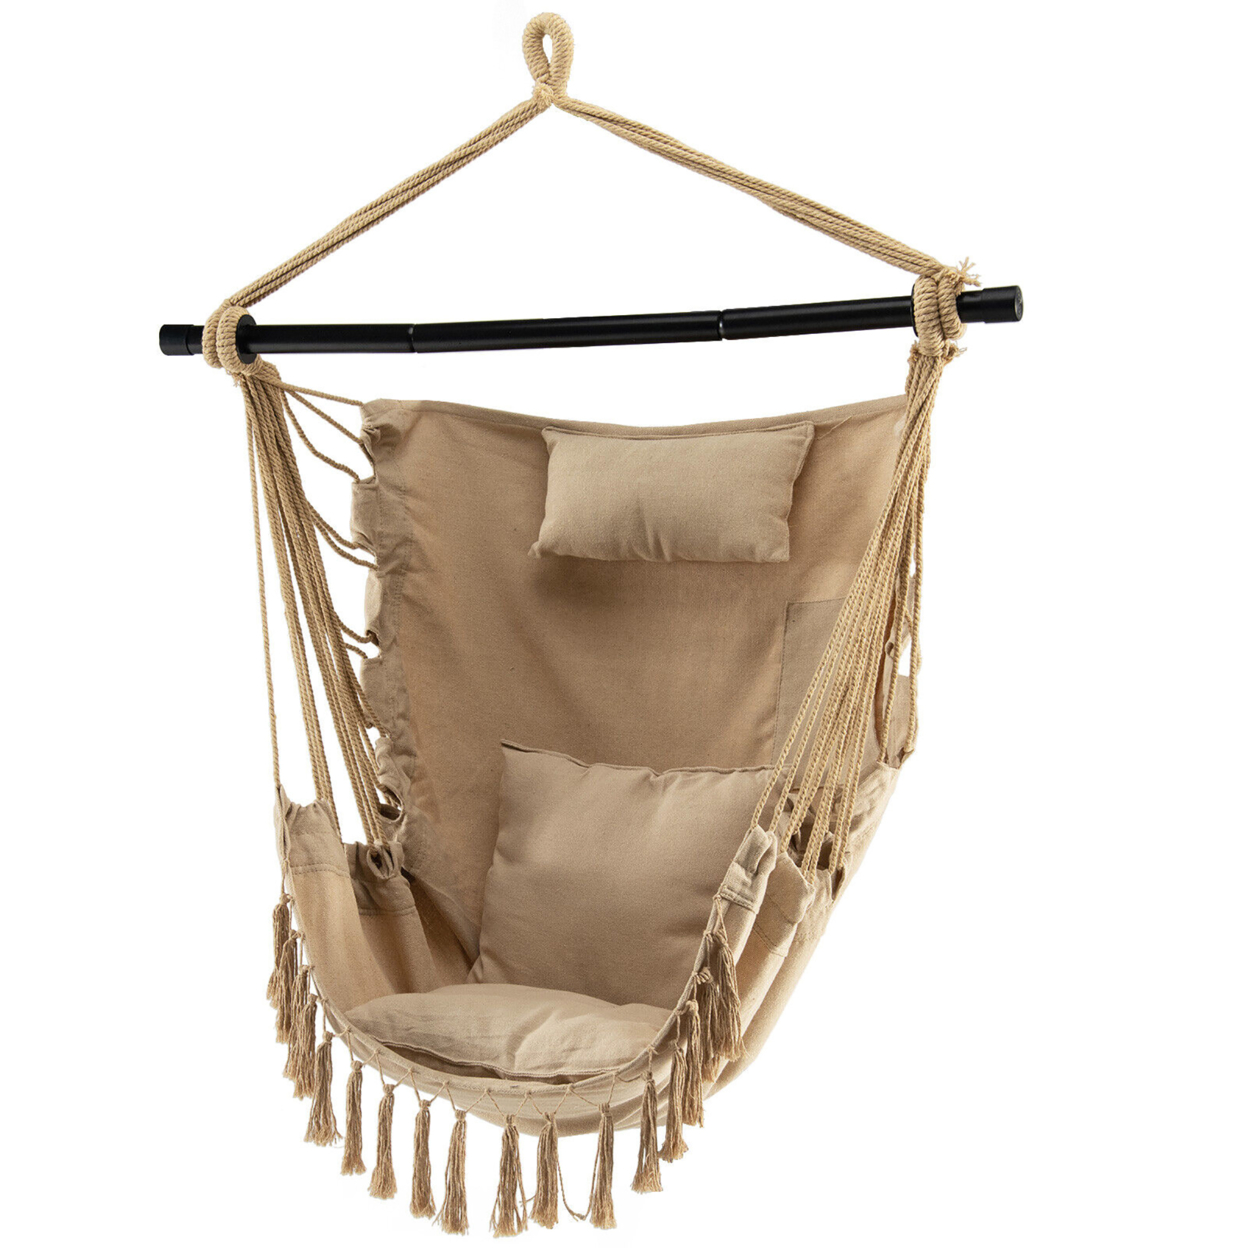 Hammock Chair W/ Soft Pillow Cushions Pocket Hanging Rope Swing Steel Bar - Beige